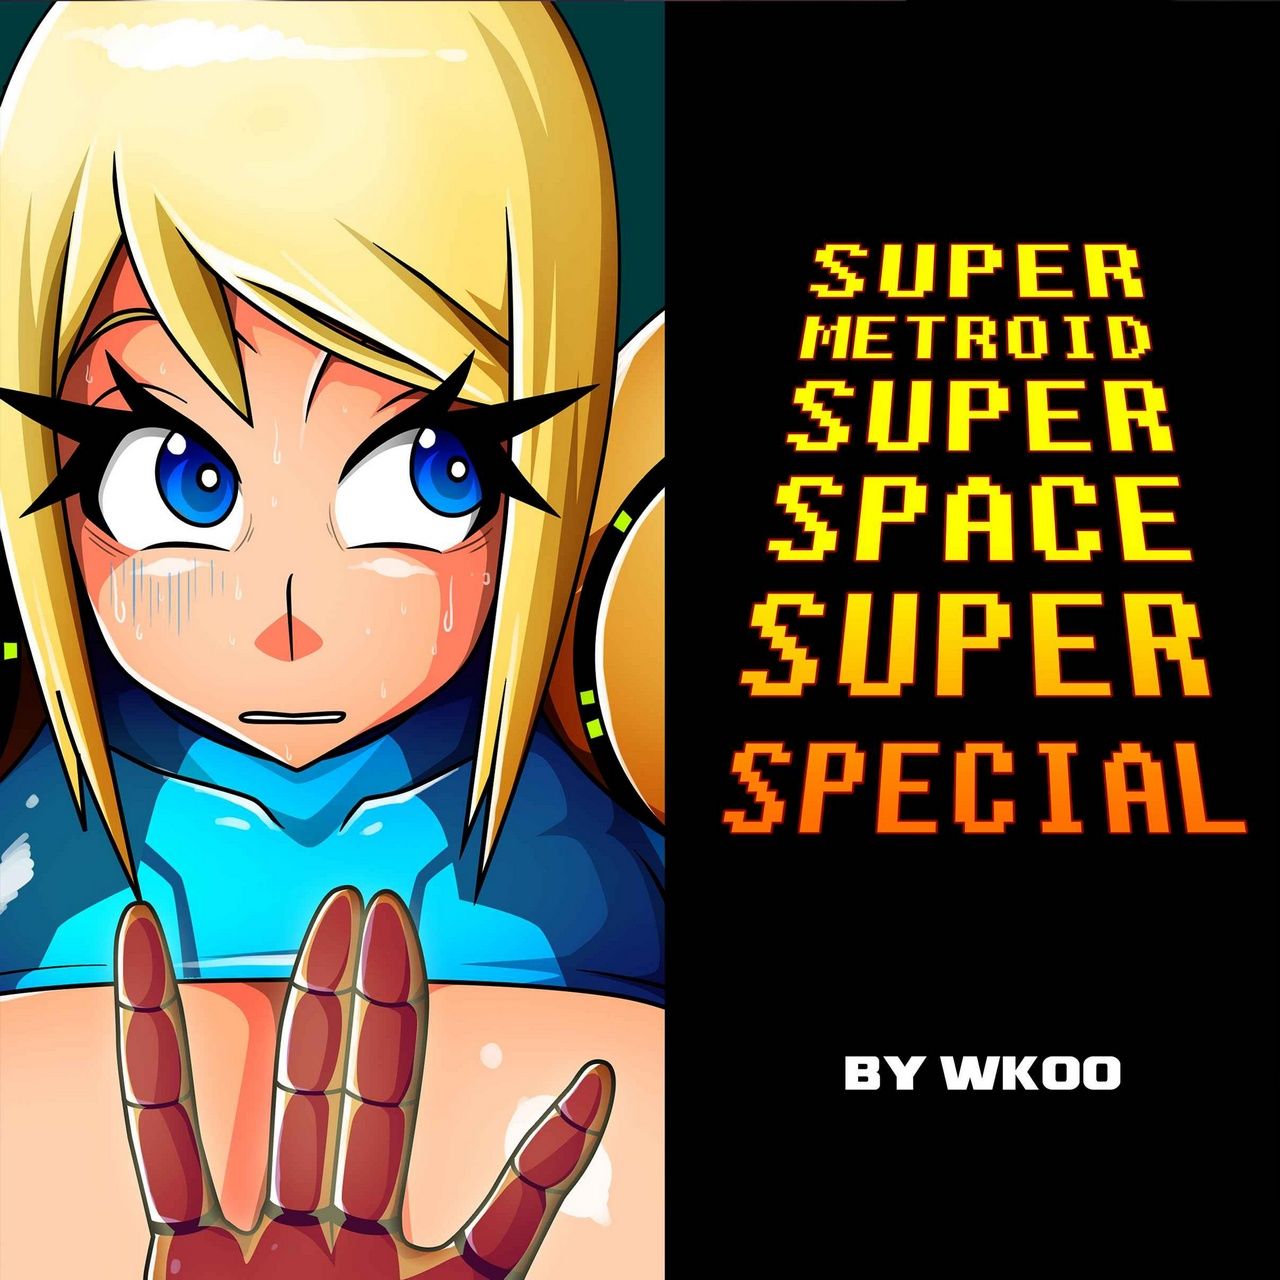 Super Metroid Super Space Super Special page 1